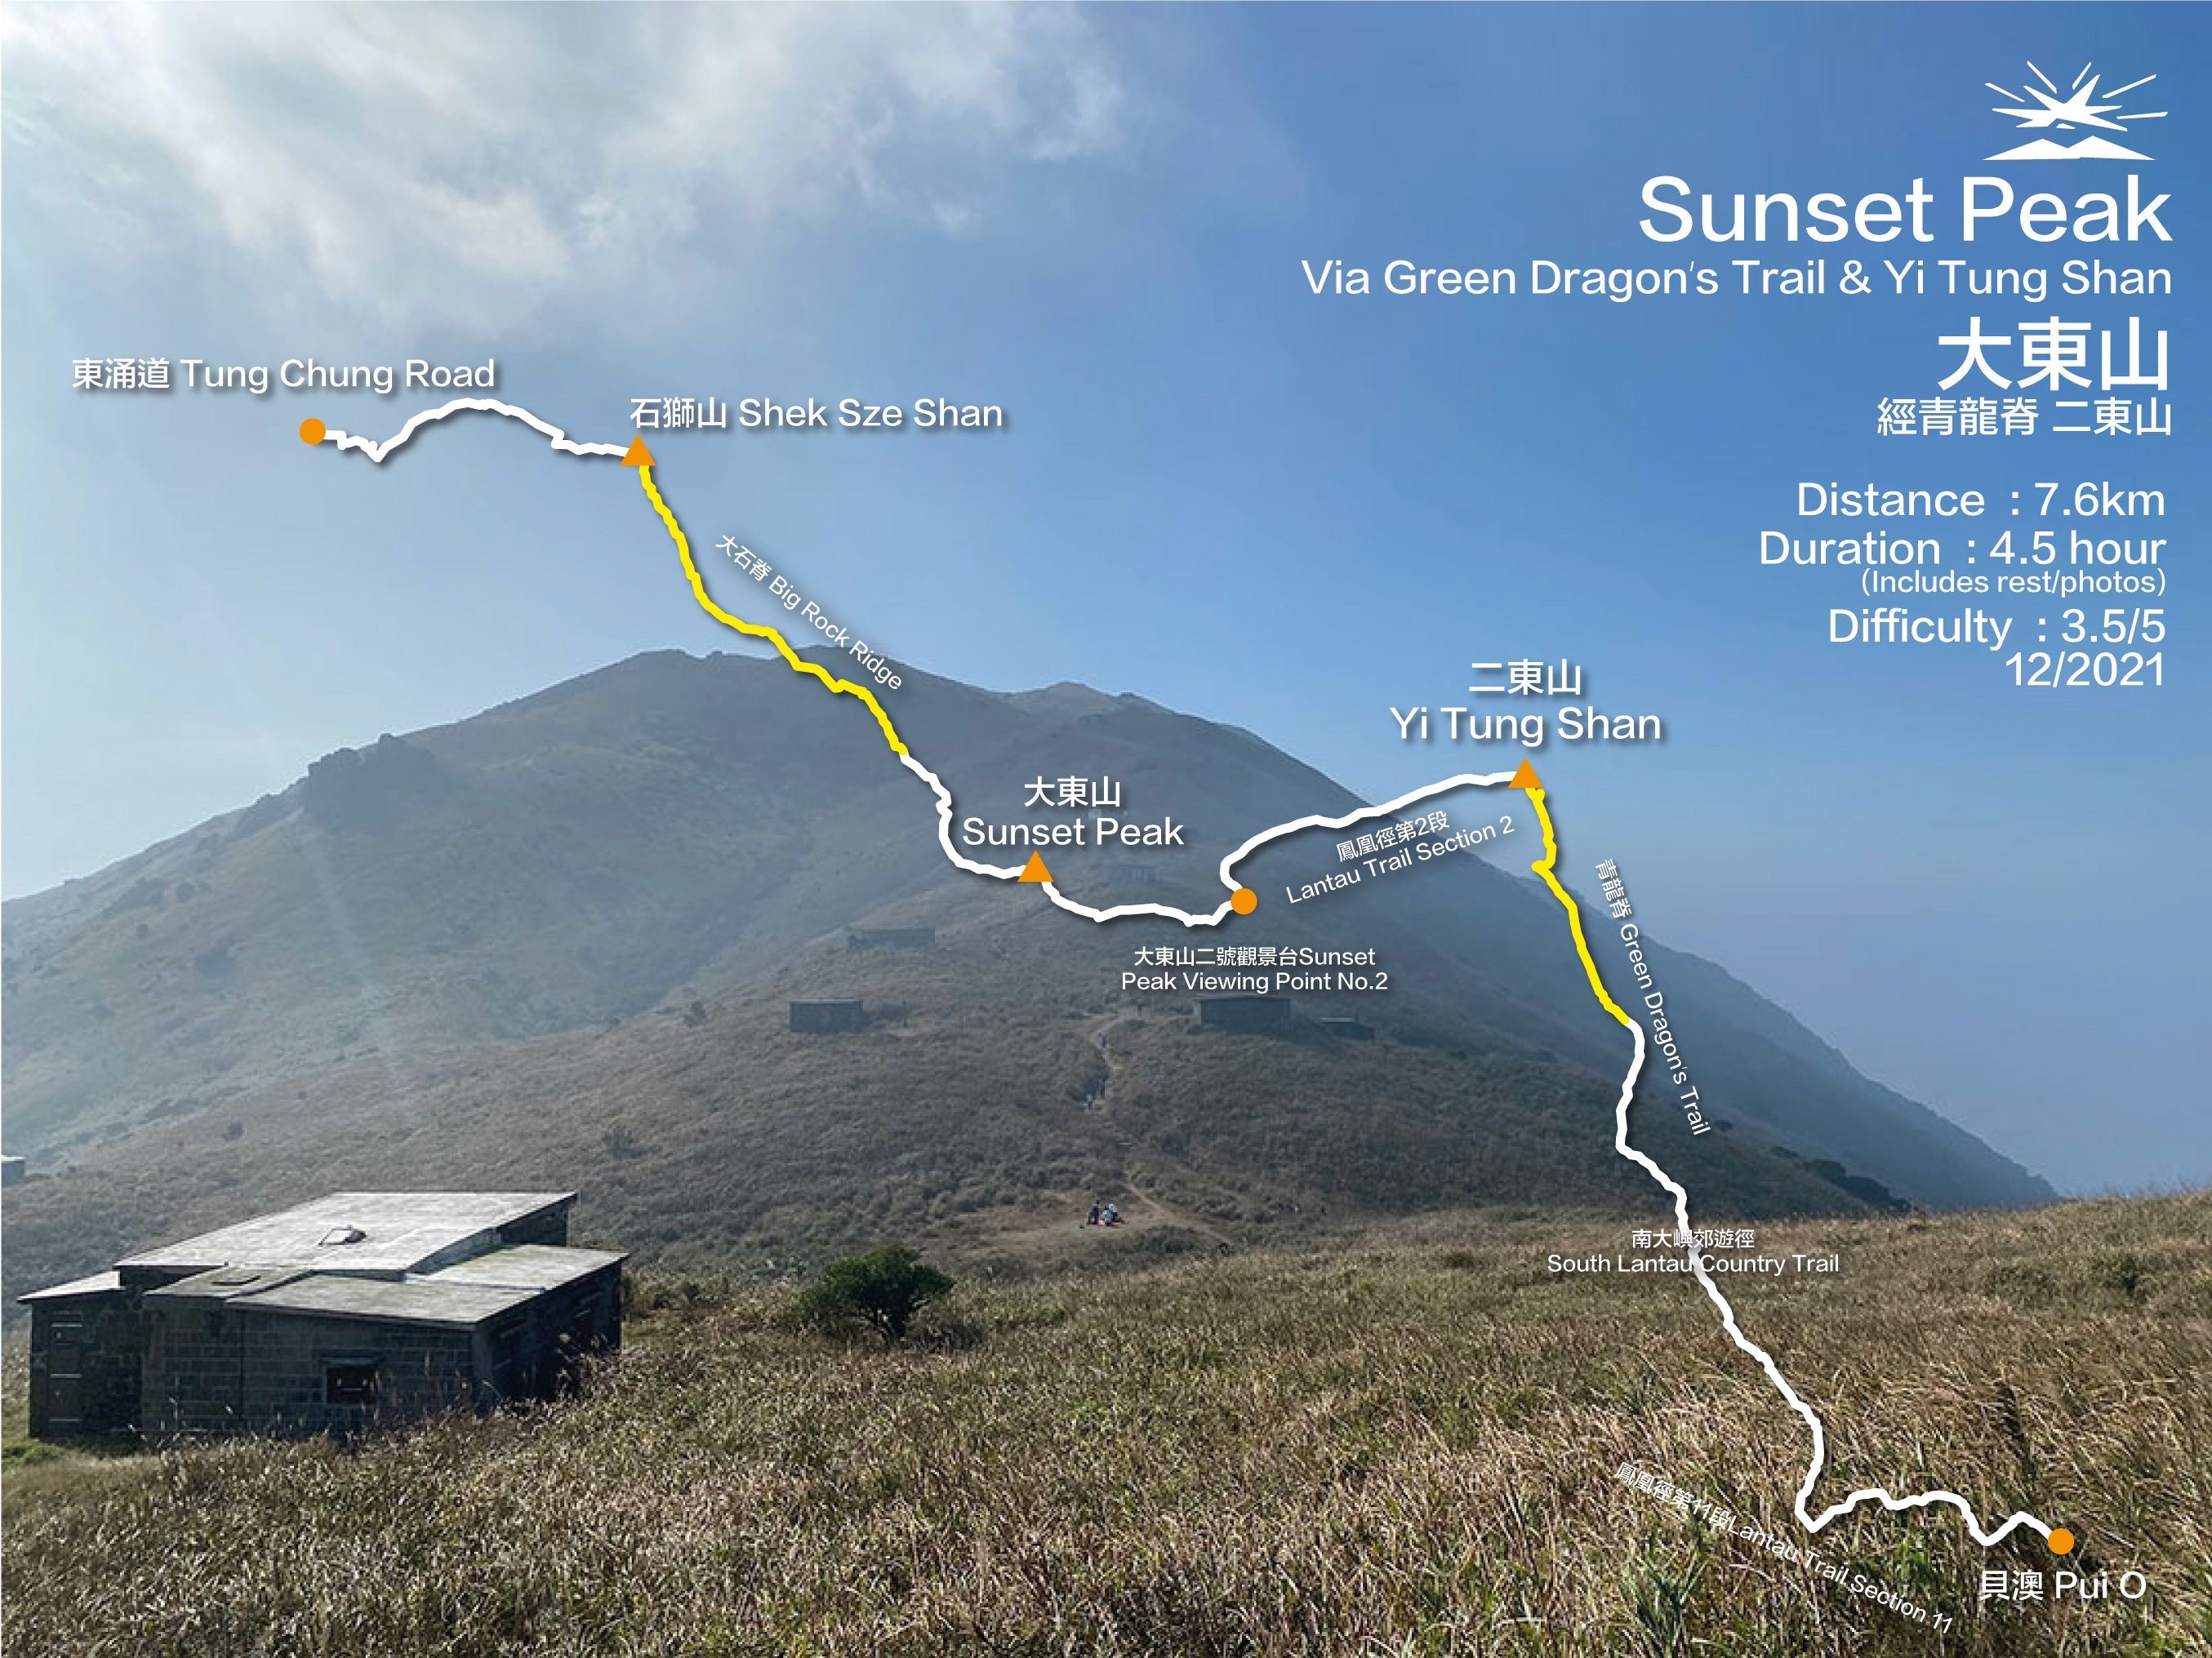 Sunset Peak via Green Dragon's Trail